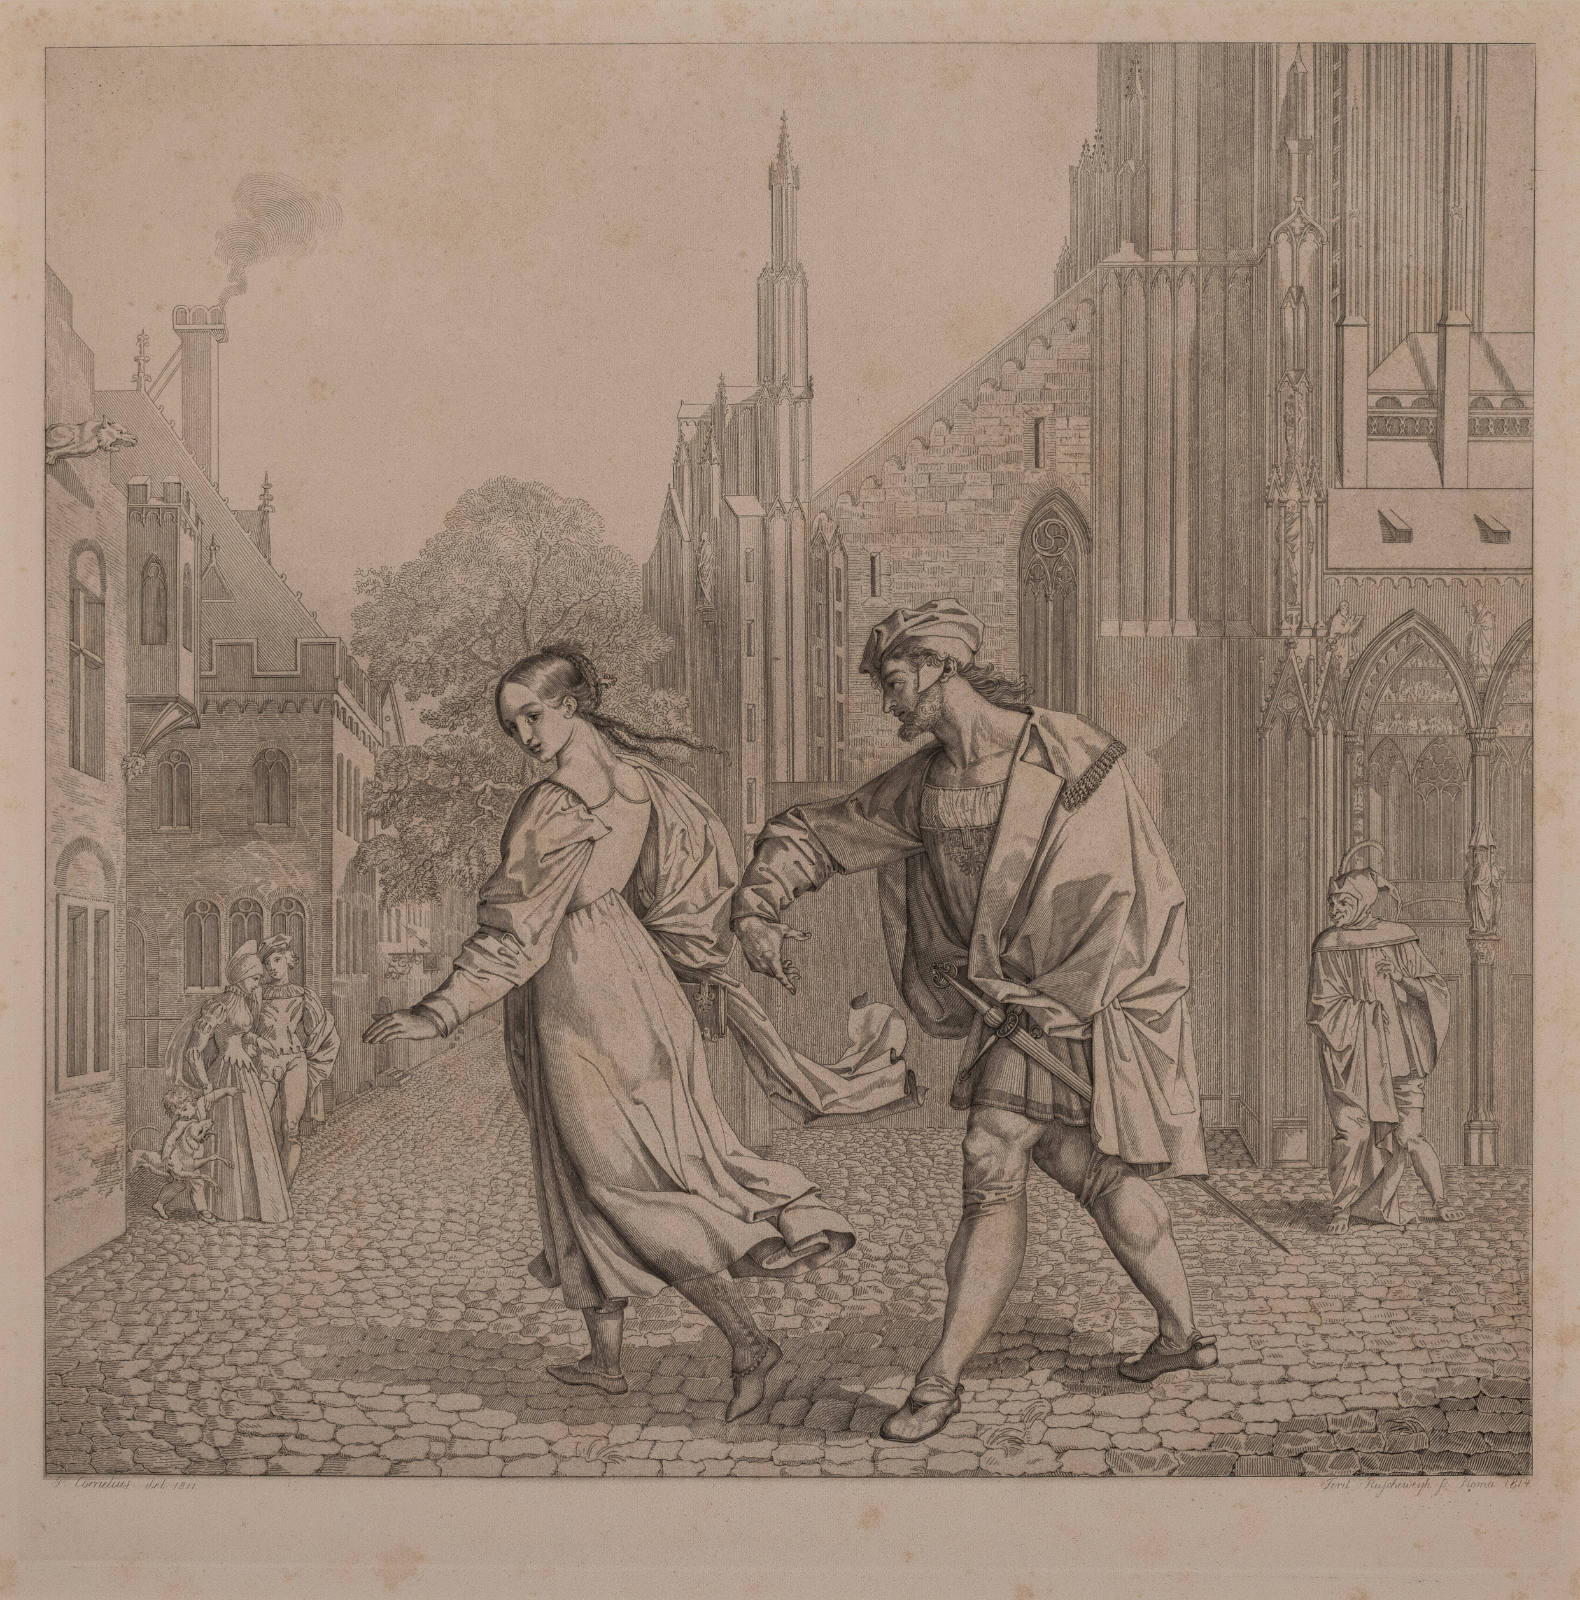 Twelve Illustrations to Goethe's Faust by Peter Cornelius (Bilder zu Goethe's Faust von P. Cornelius): Plate V, Scene of the Departure from Church (Scene am Ausgang der Kirche)